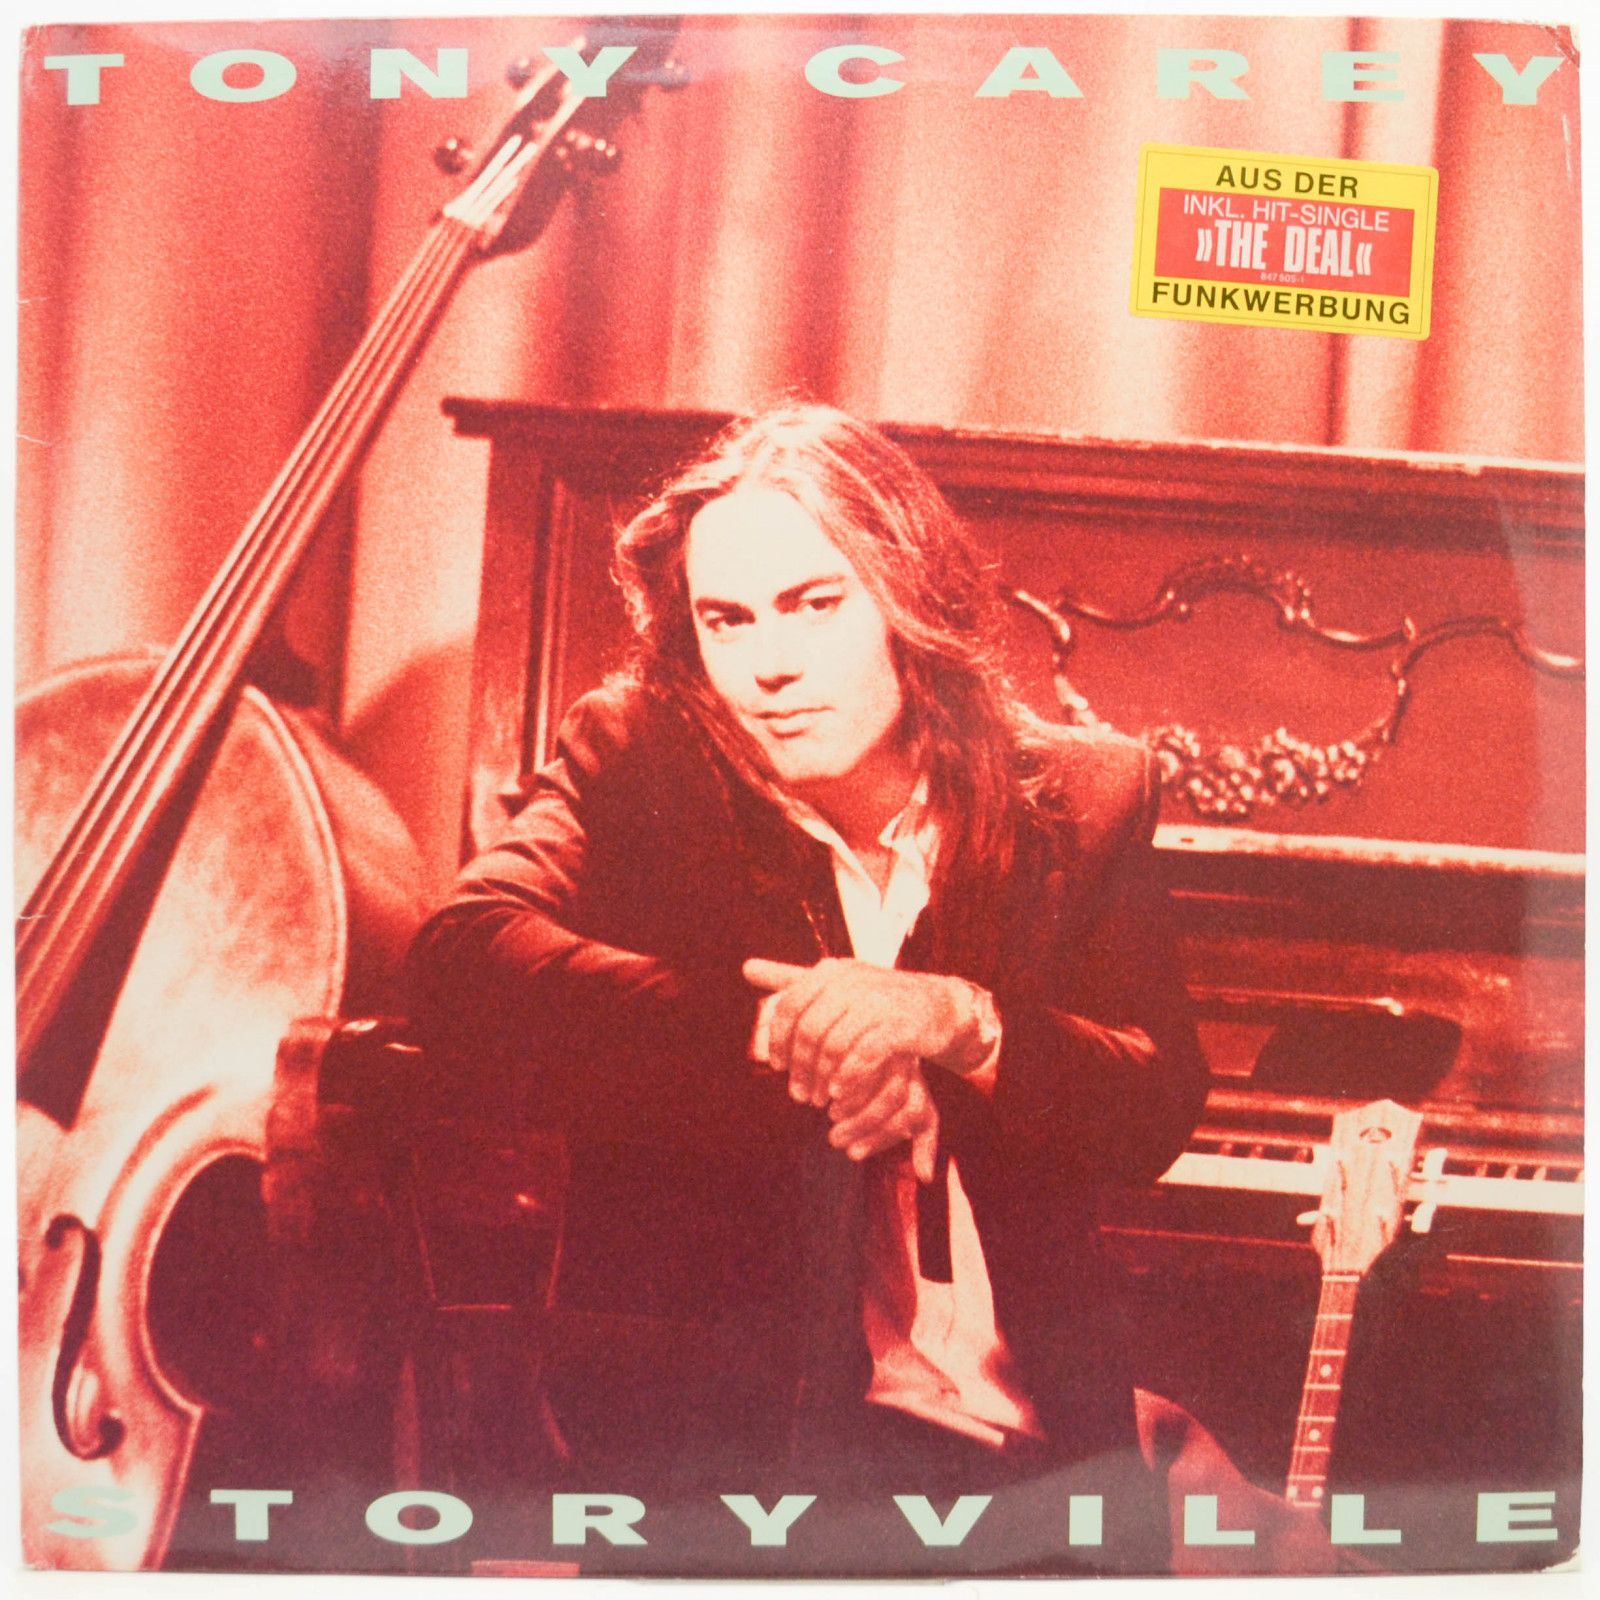 Tony Carey — Storyville, 1990